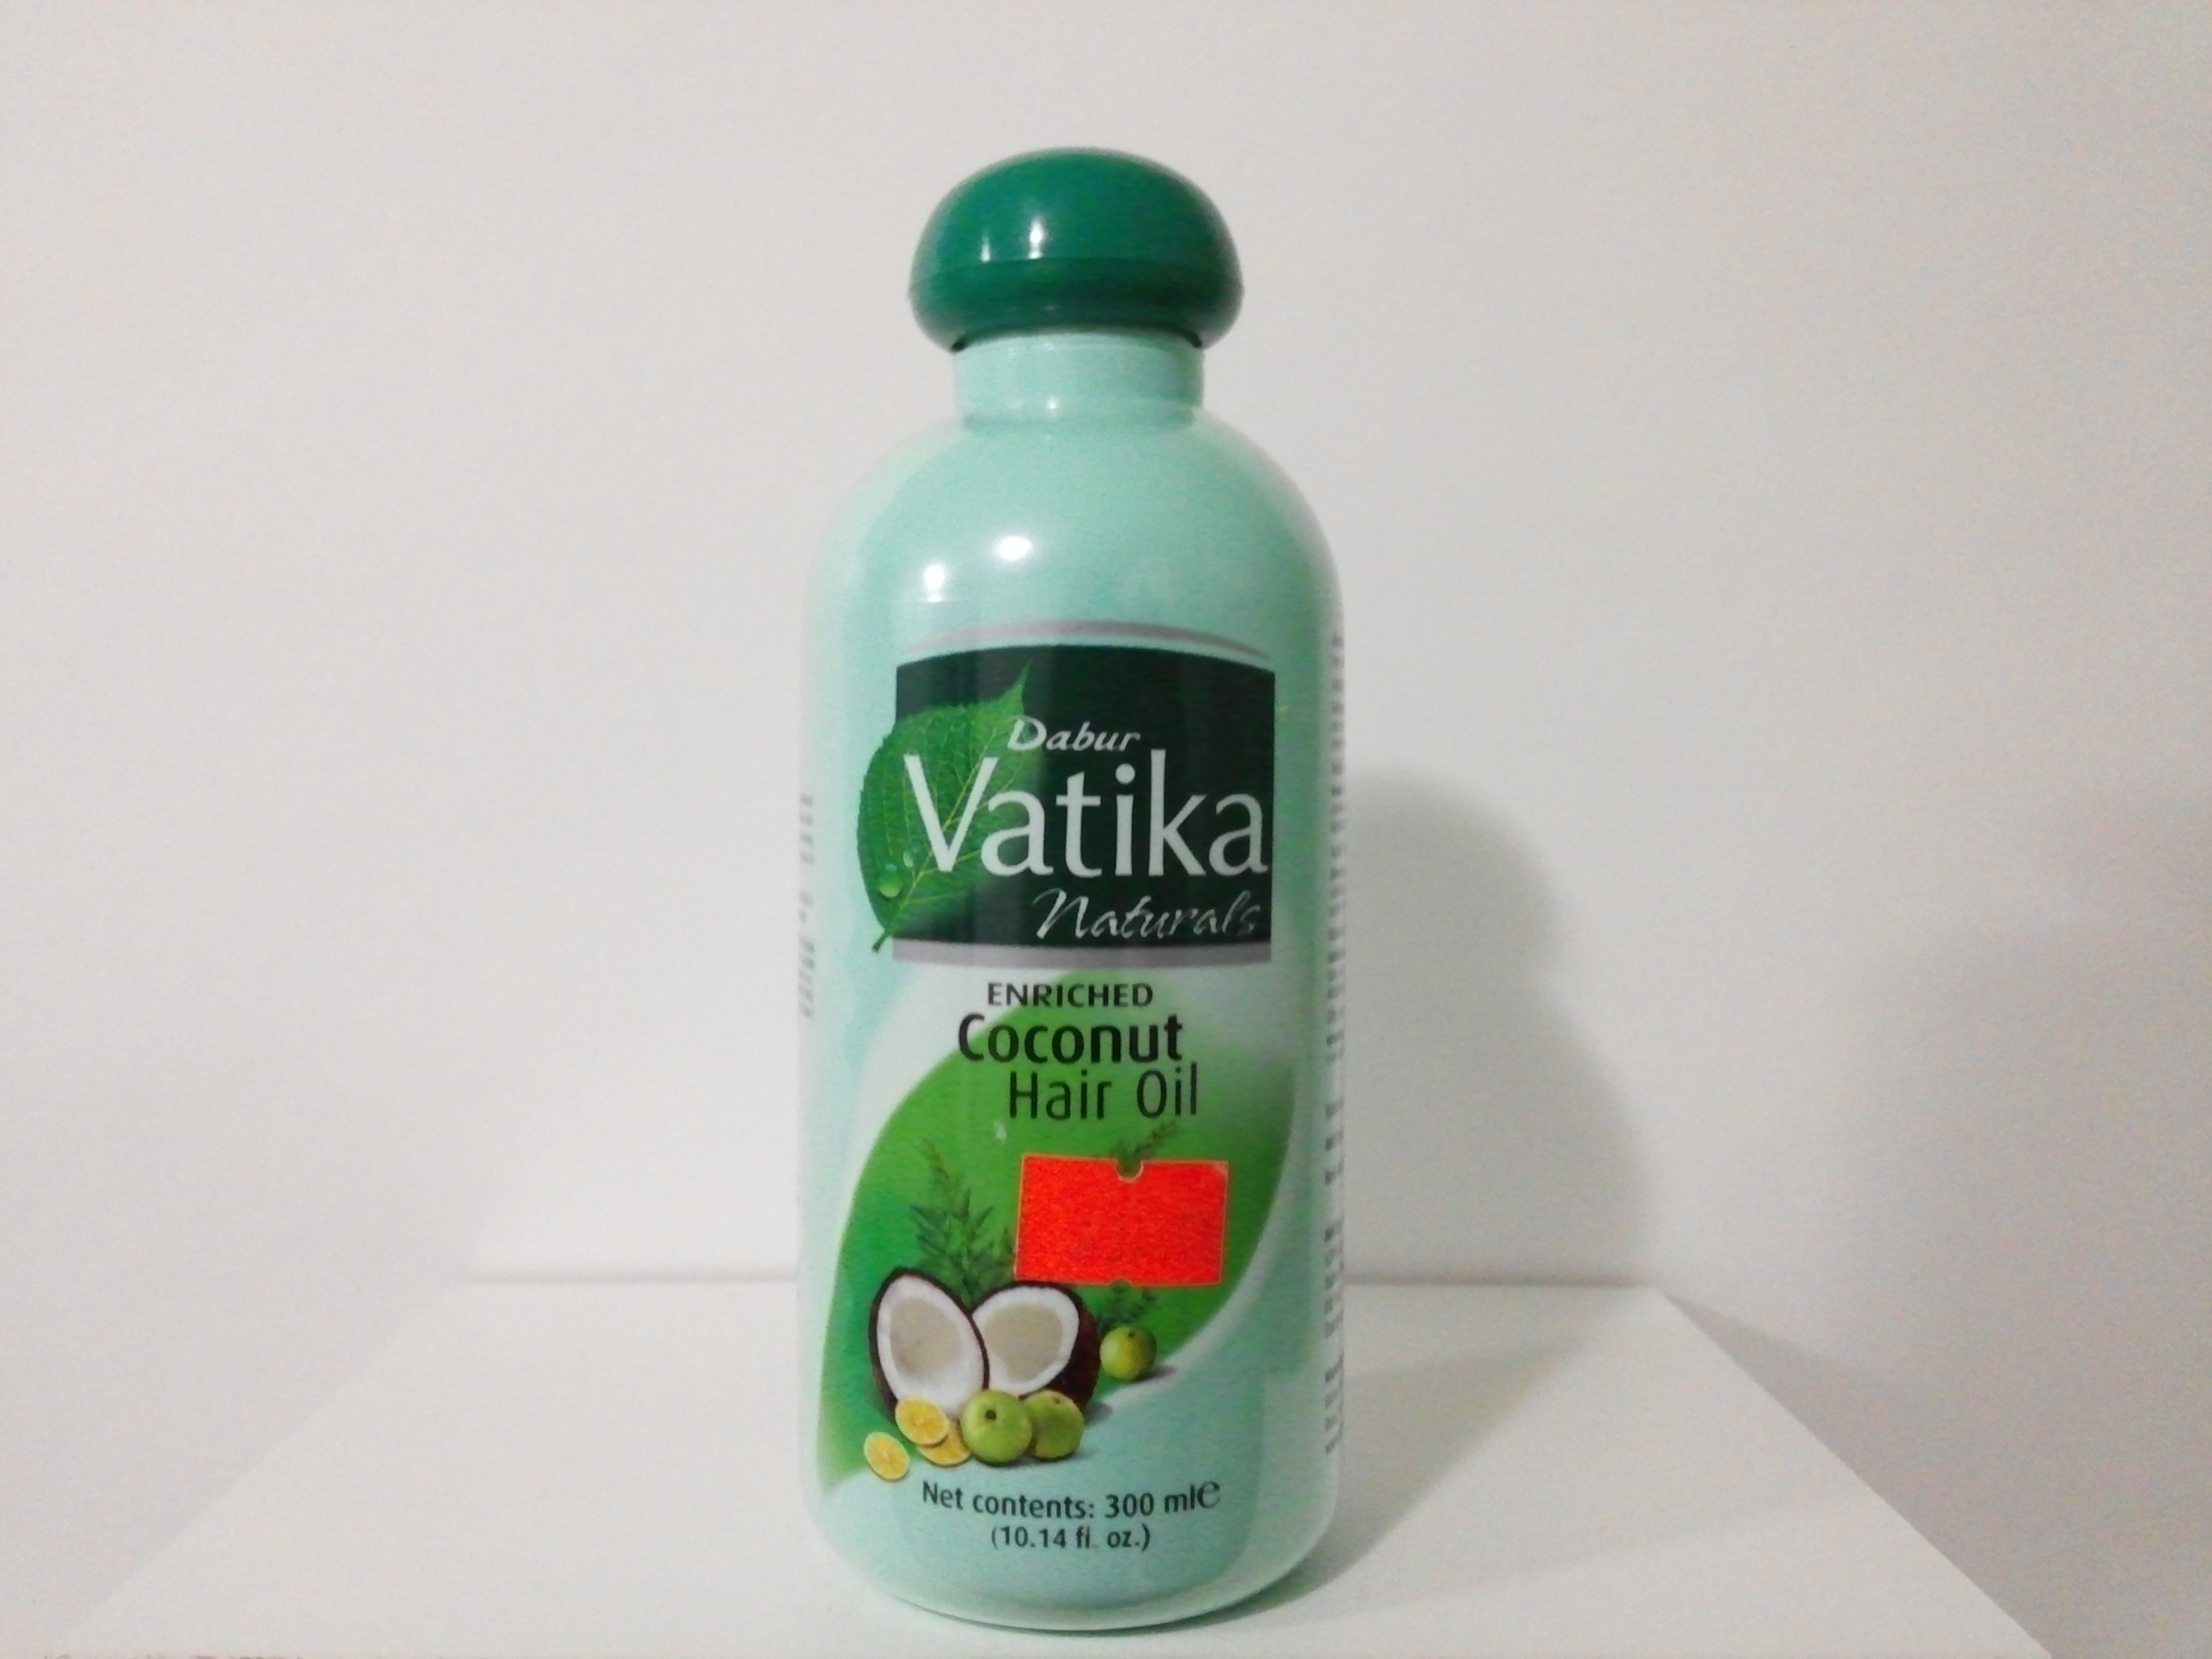 Dabur Vatika Enriched Coconut Hair Oil  10.14 oz